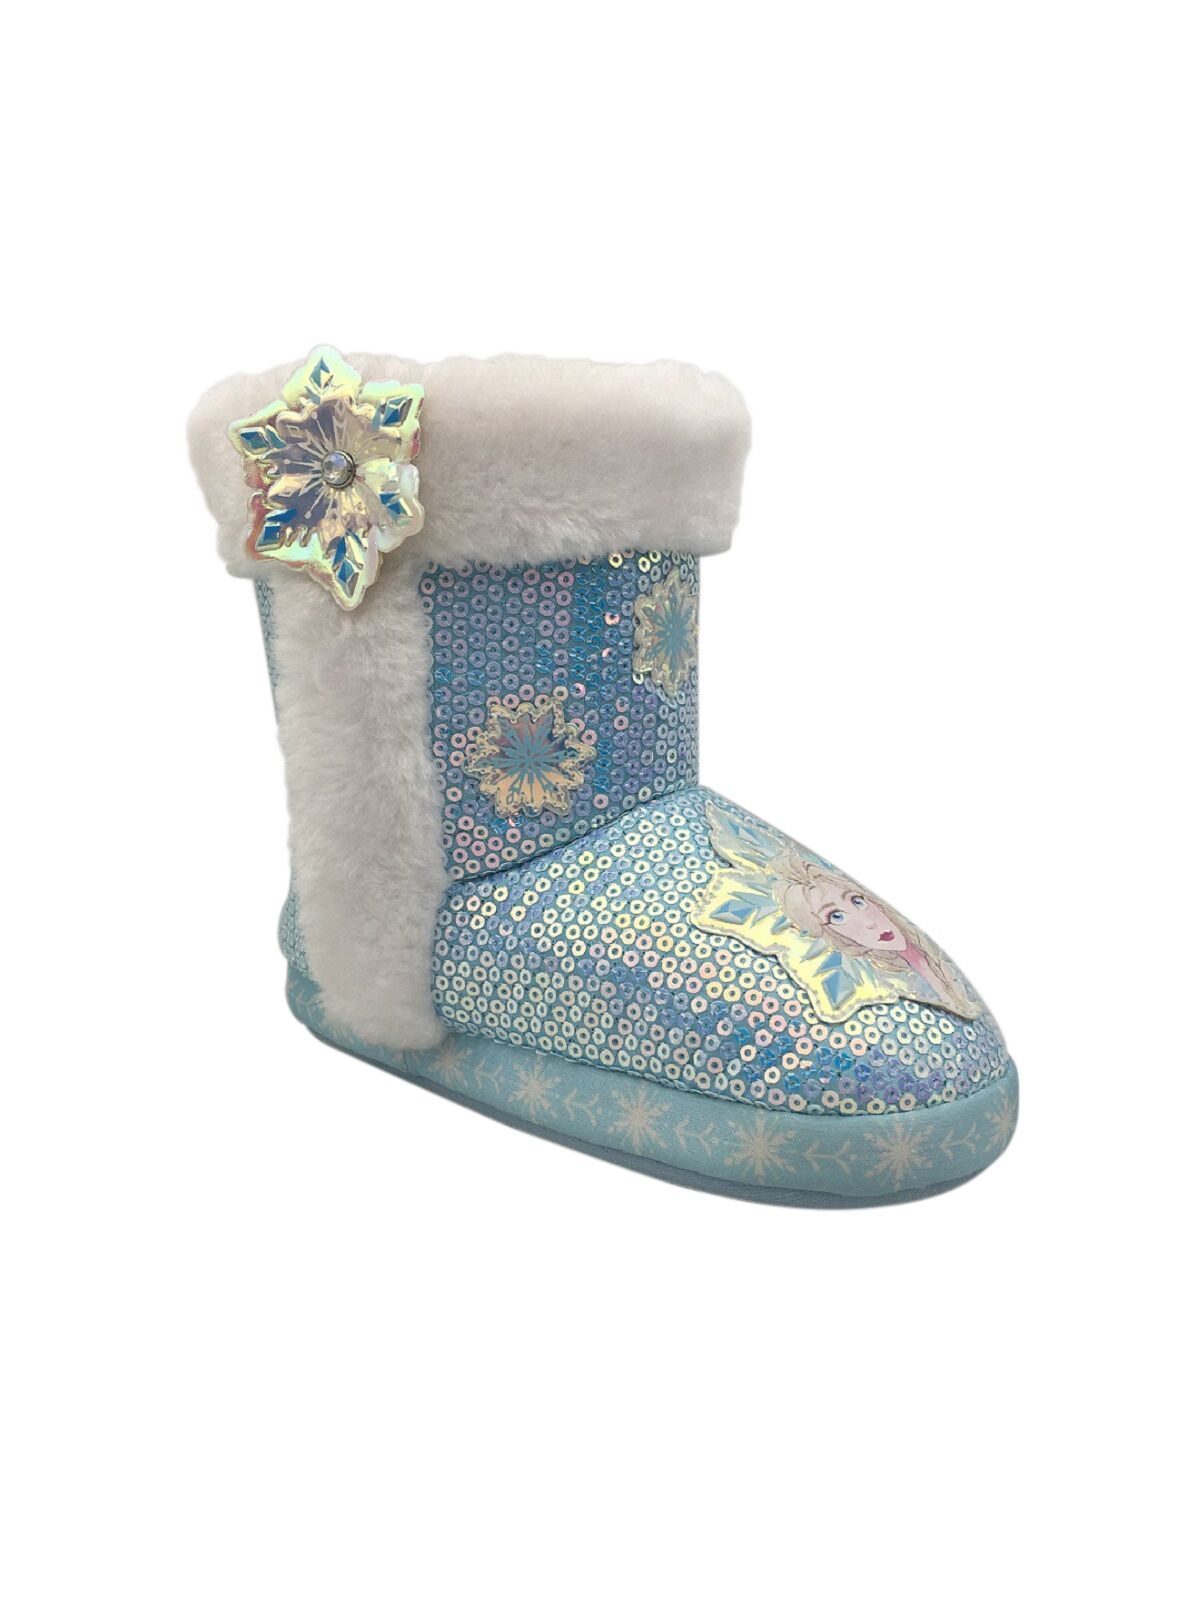 New w/defect Toddler Girl's Disney Frozen Winter Bootie Slippers Blue 99305 61R 